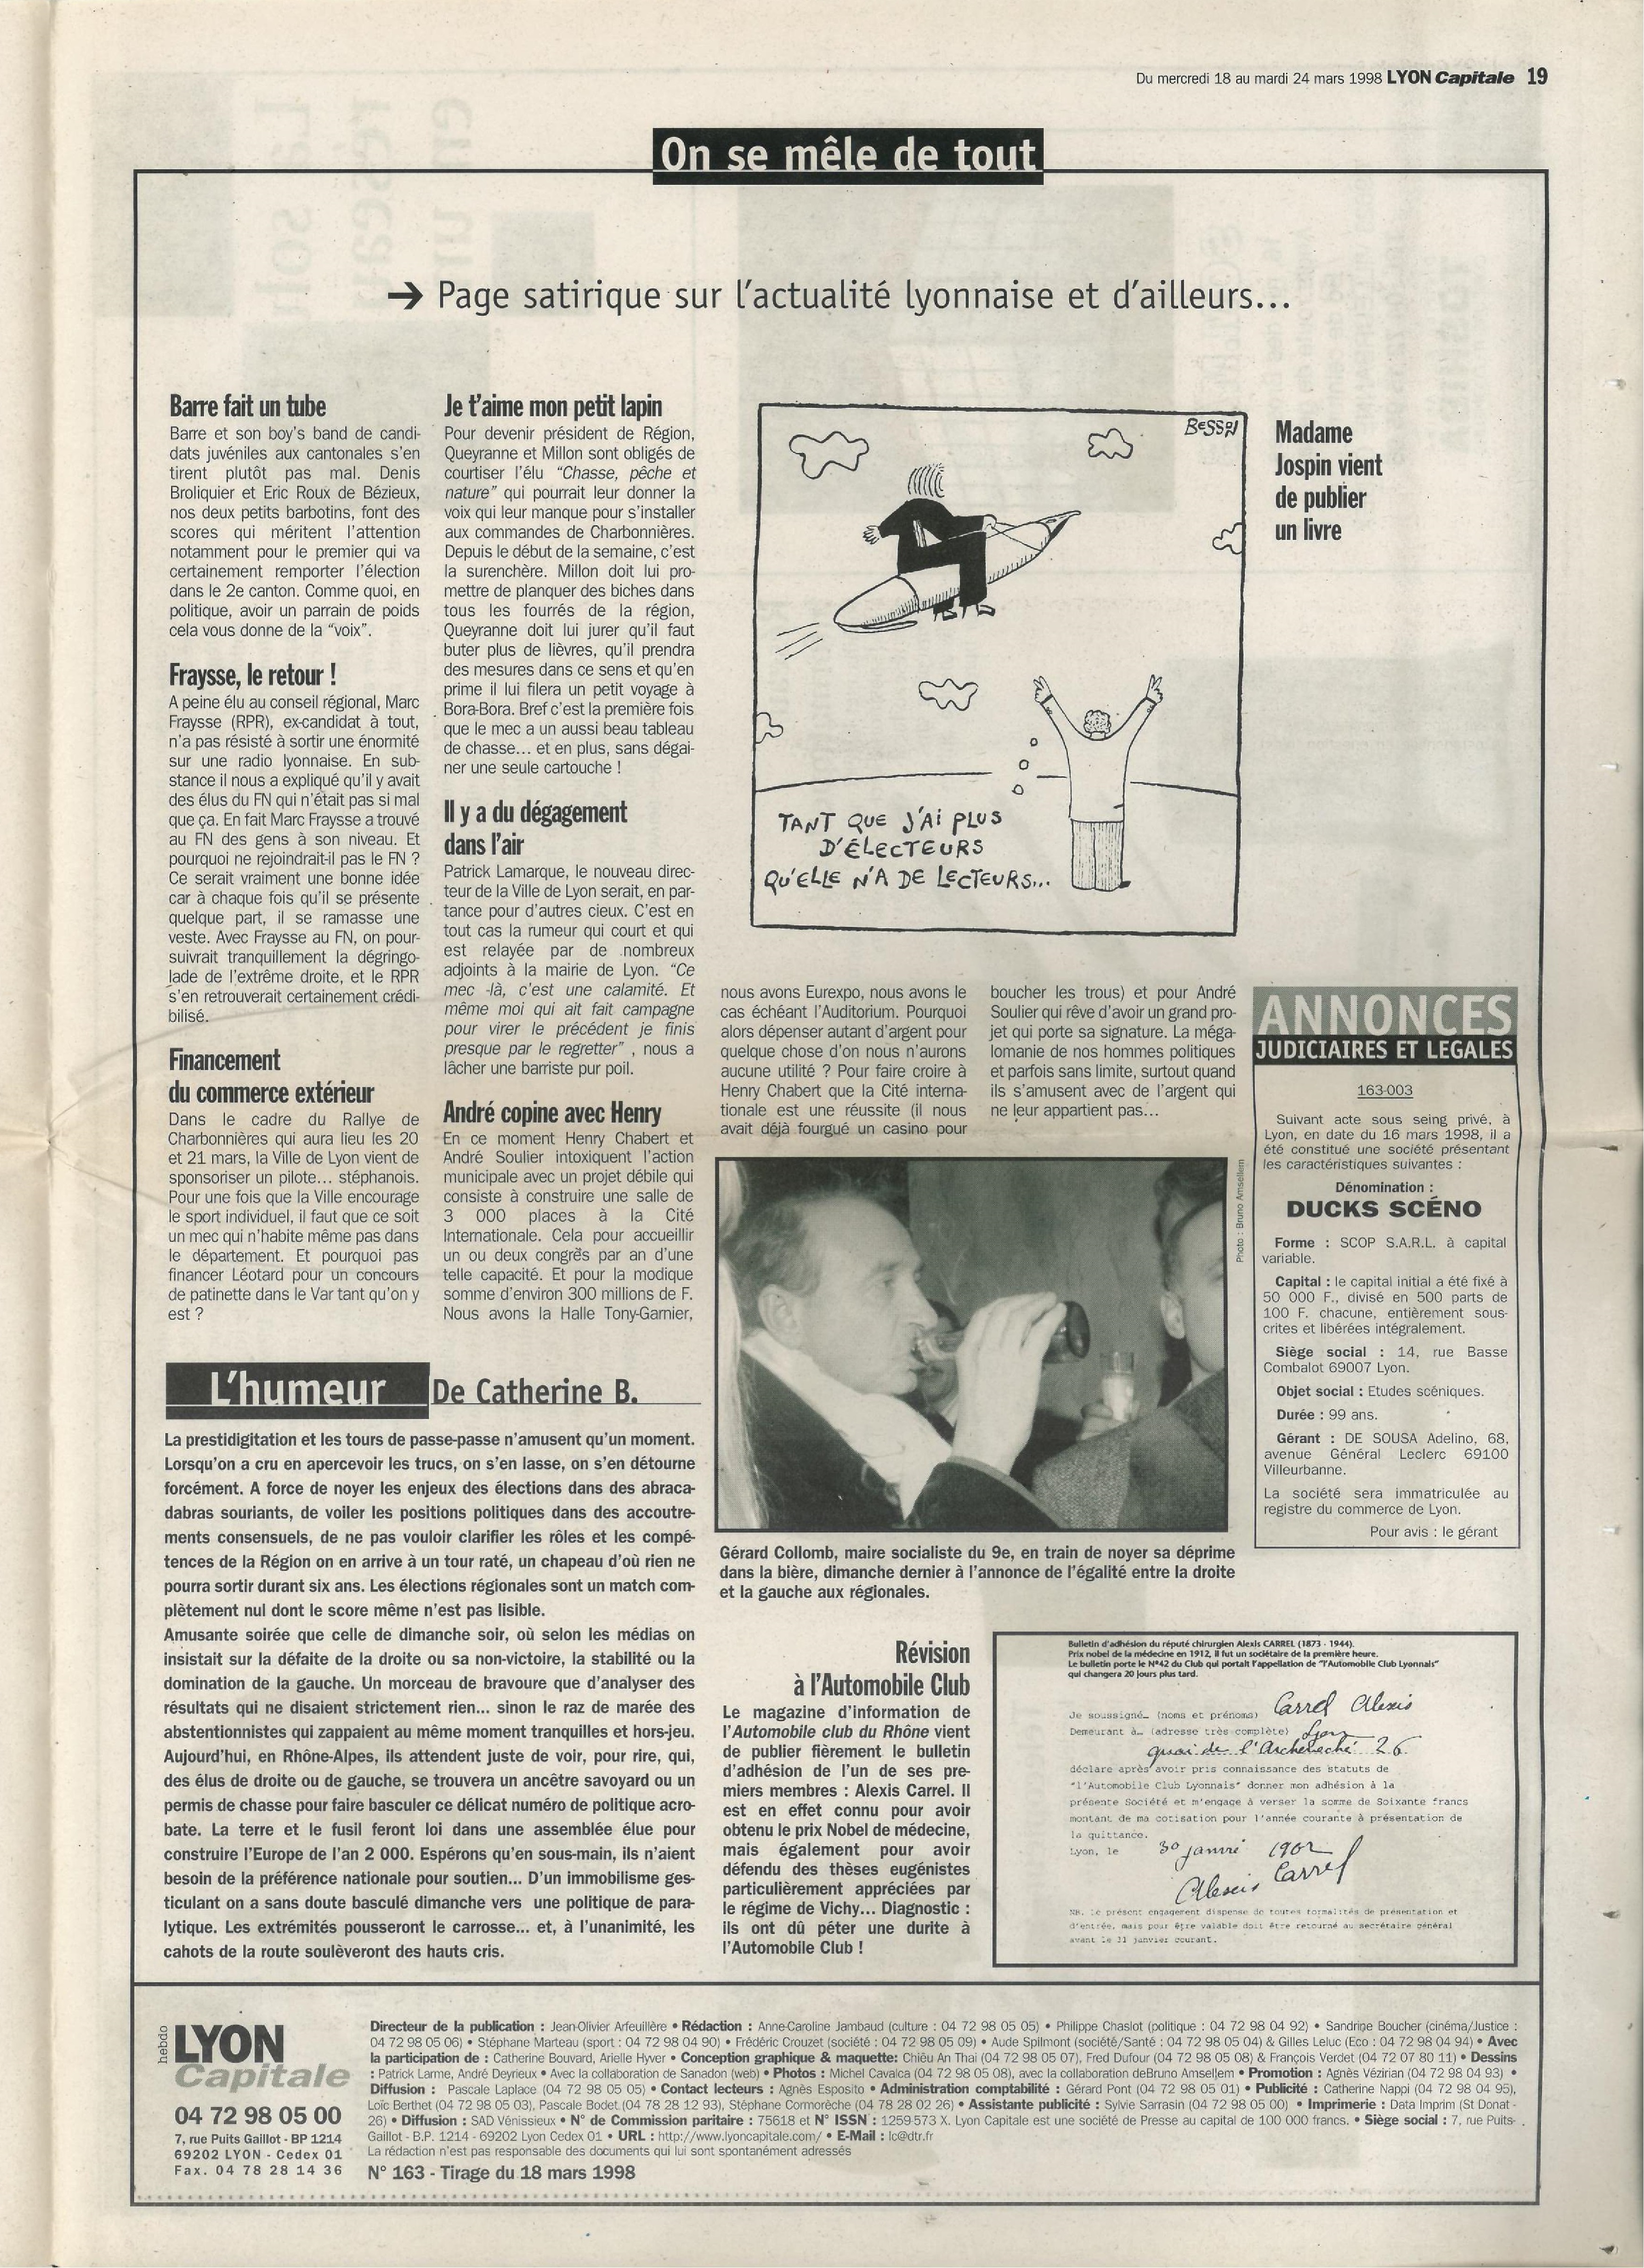 Lyon Capitale n°163, 18 mars 1998, p. 19 © Lyon Capitale